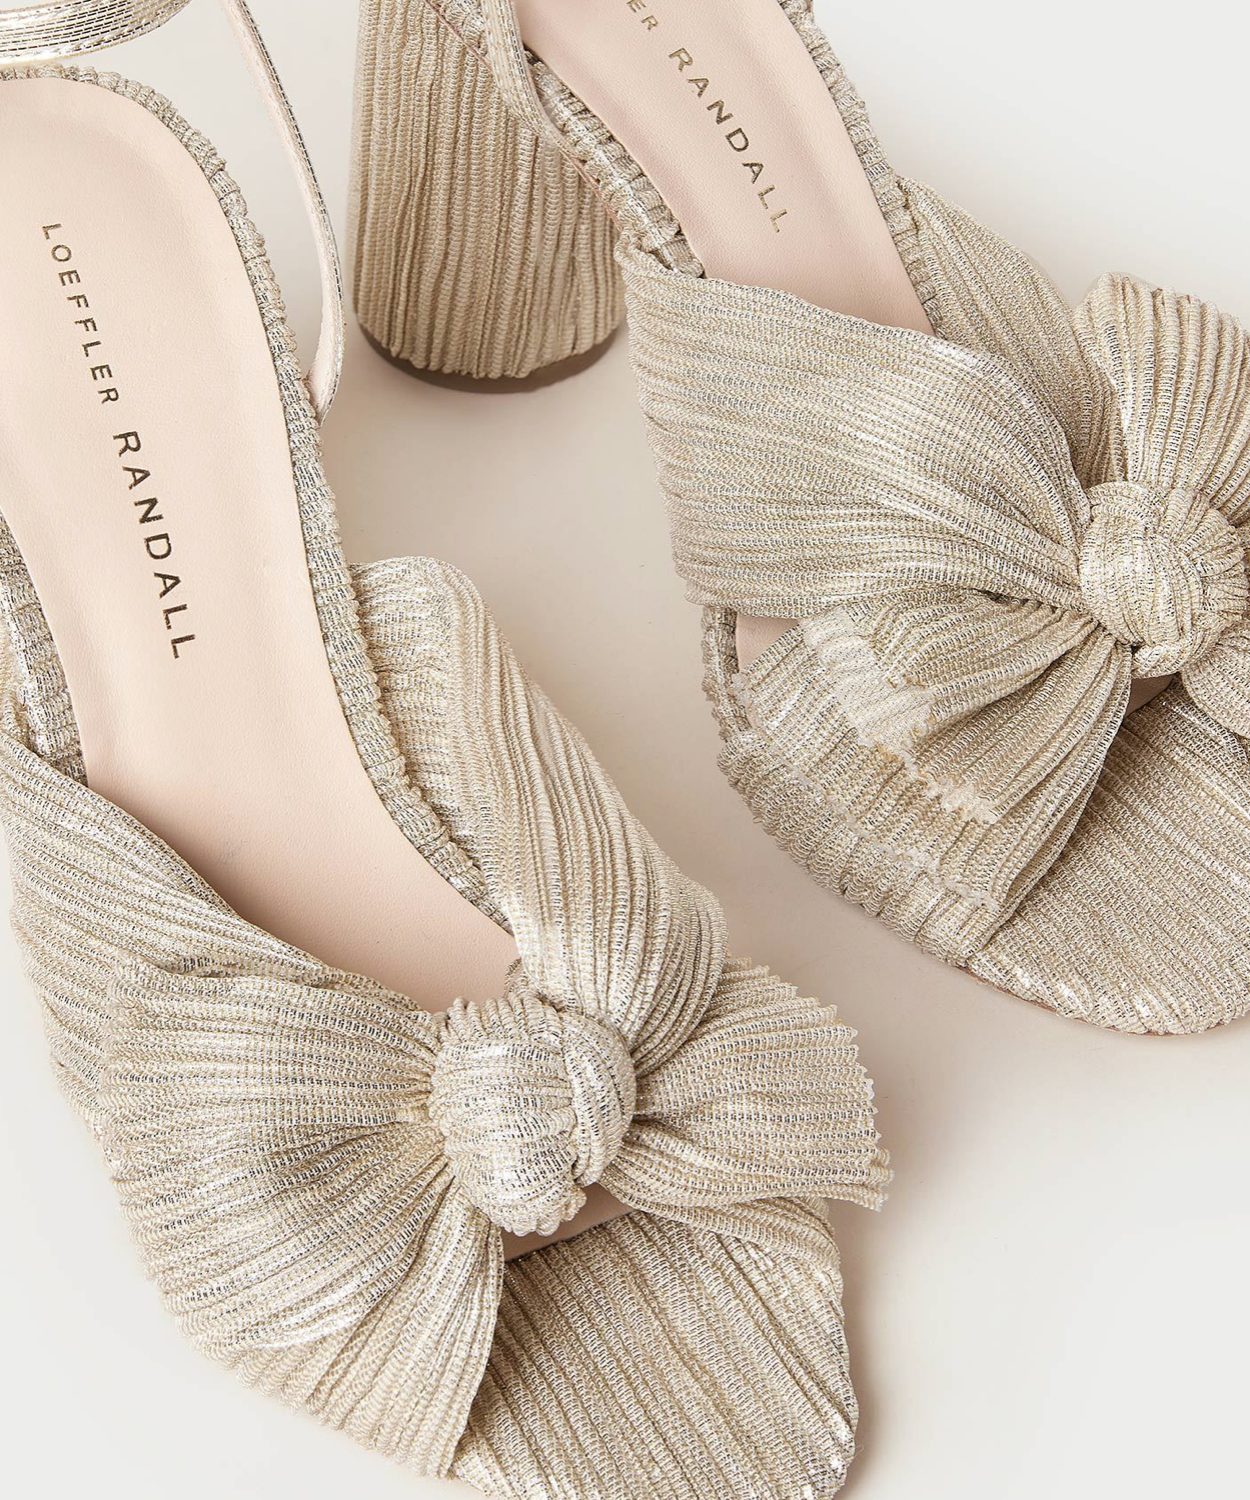 Platinum Camellia Shoes by Loeffler Randall